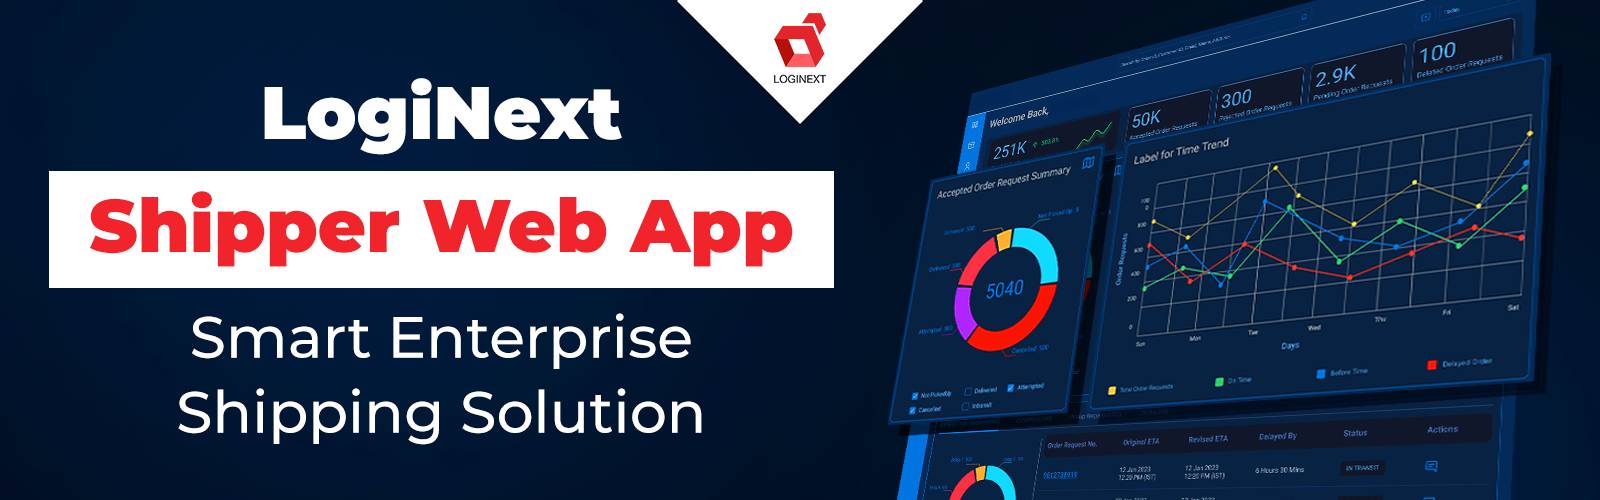 LogiNext Shipper Web App - De beste Shipper Web App